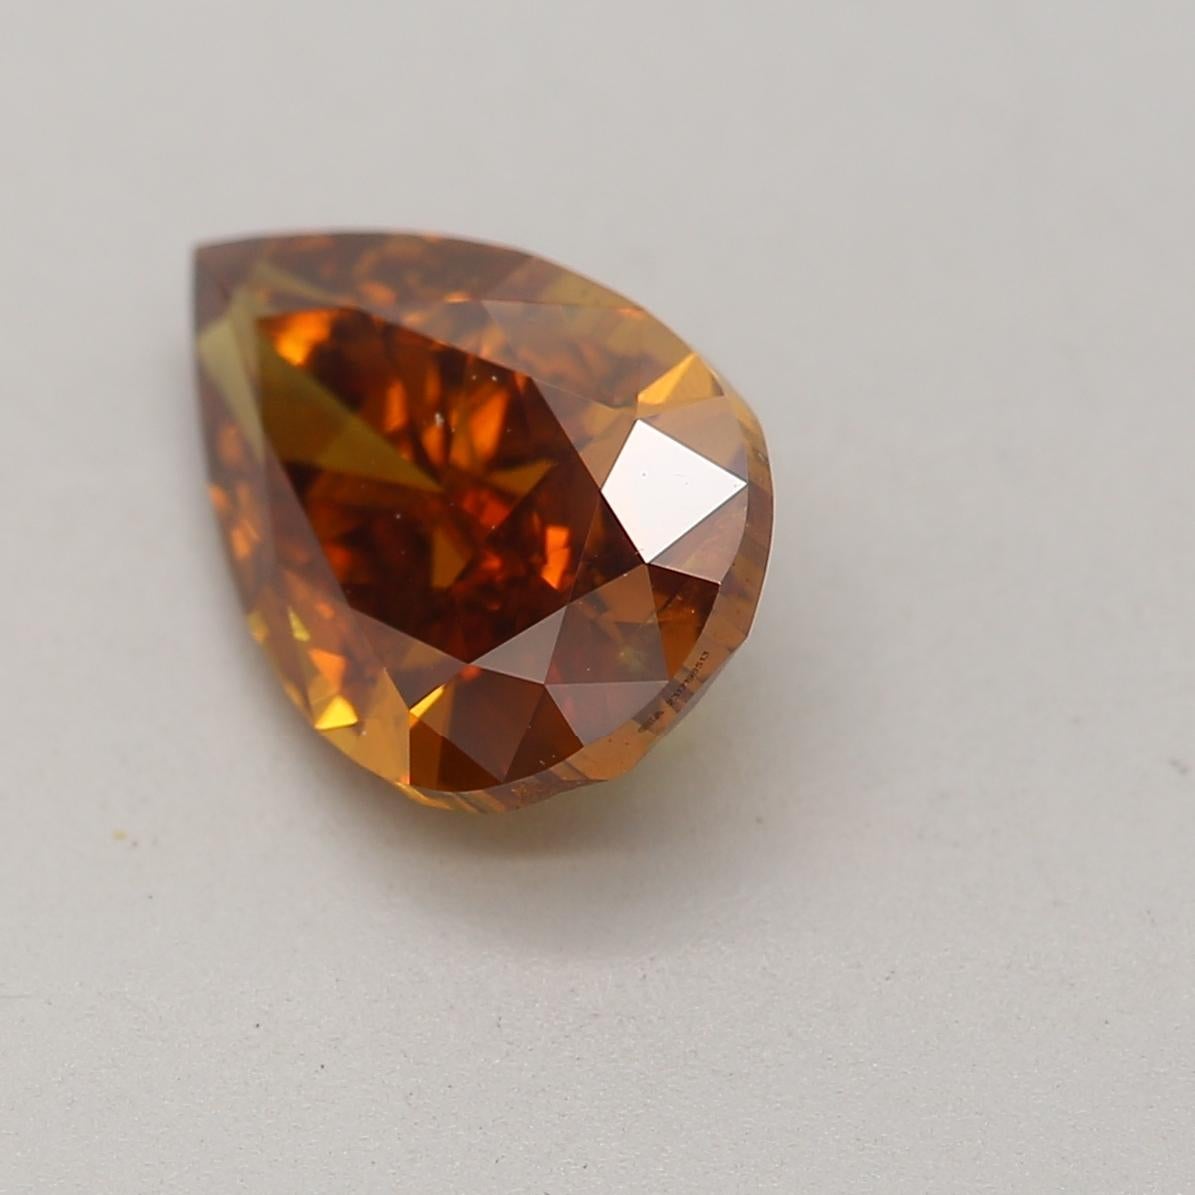 Pear Cut 1.02 Carat Fancy Deep  Orange Brown Pear cut diamond Si2 Clarity GIA Certified For Sale